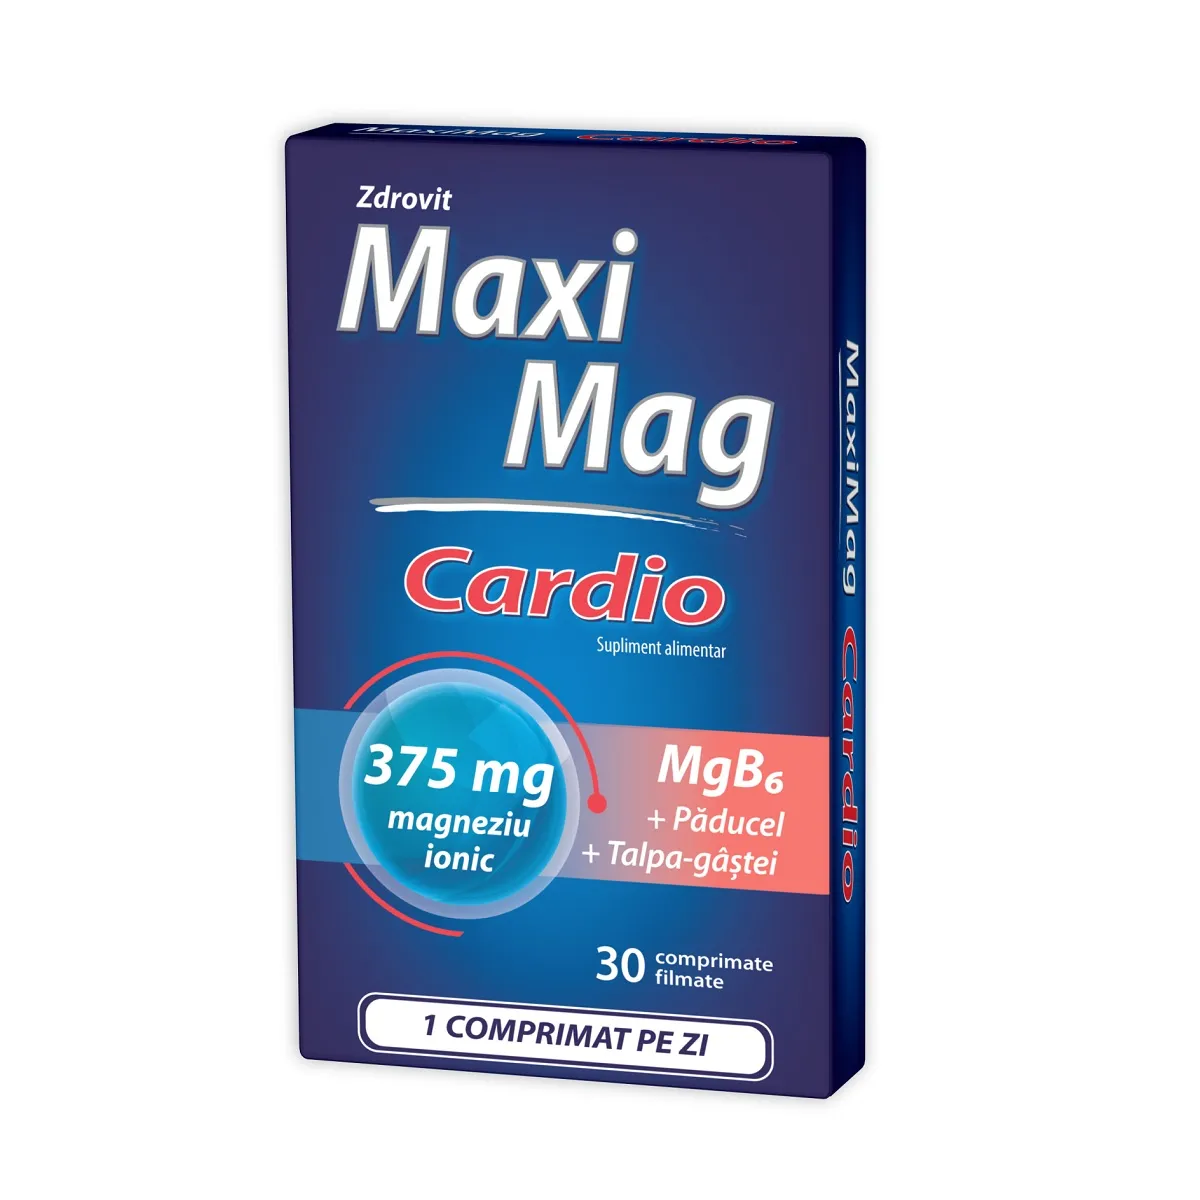 MaxiMag Cardio 375mg, 30 comprimate, Zdrovit